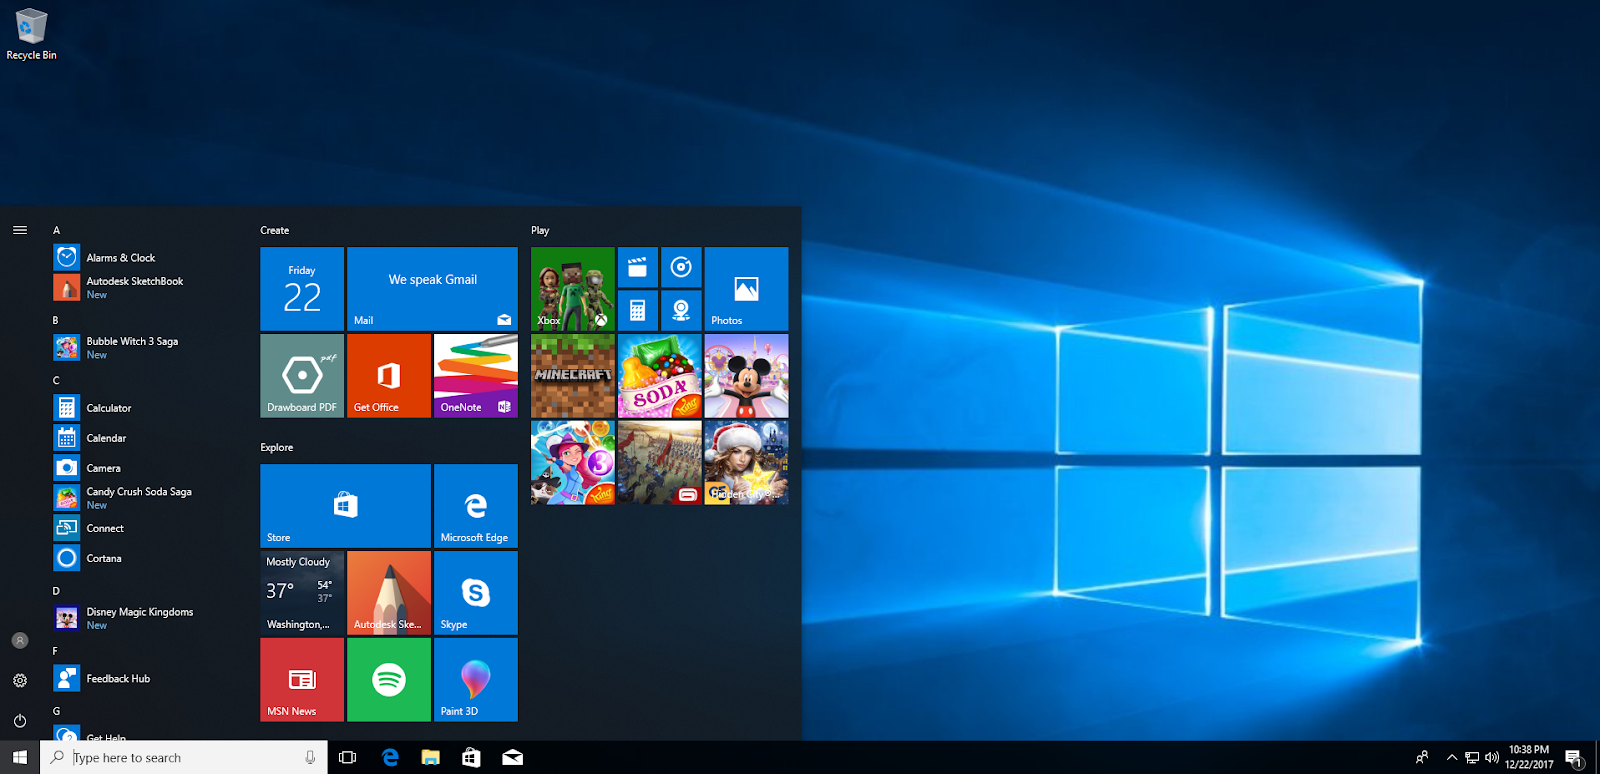 windows 10 pro version 1709 iso download